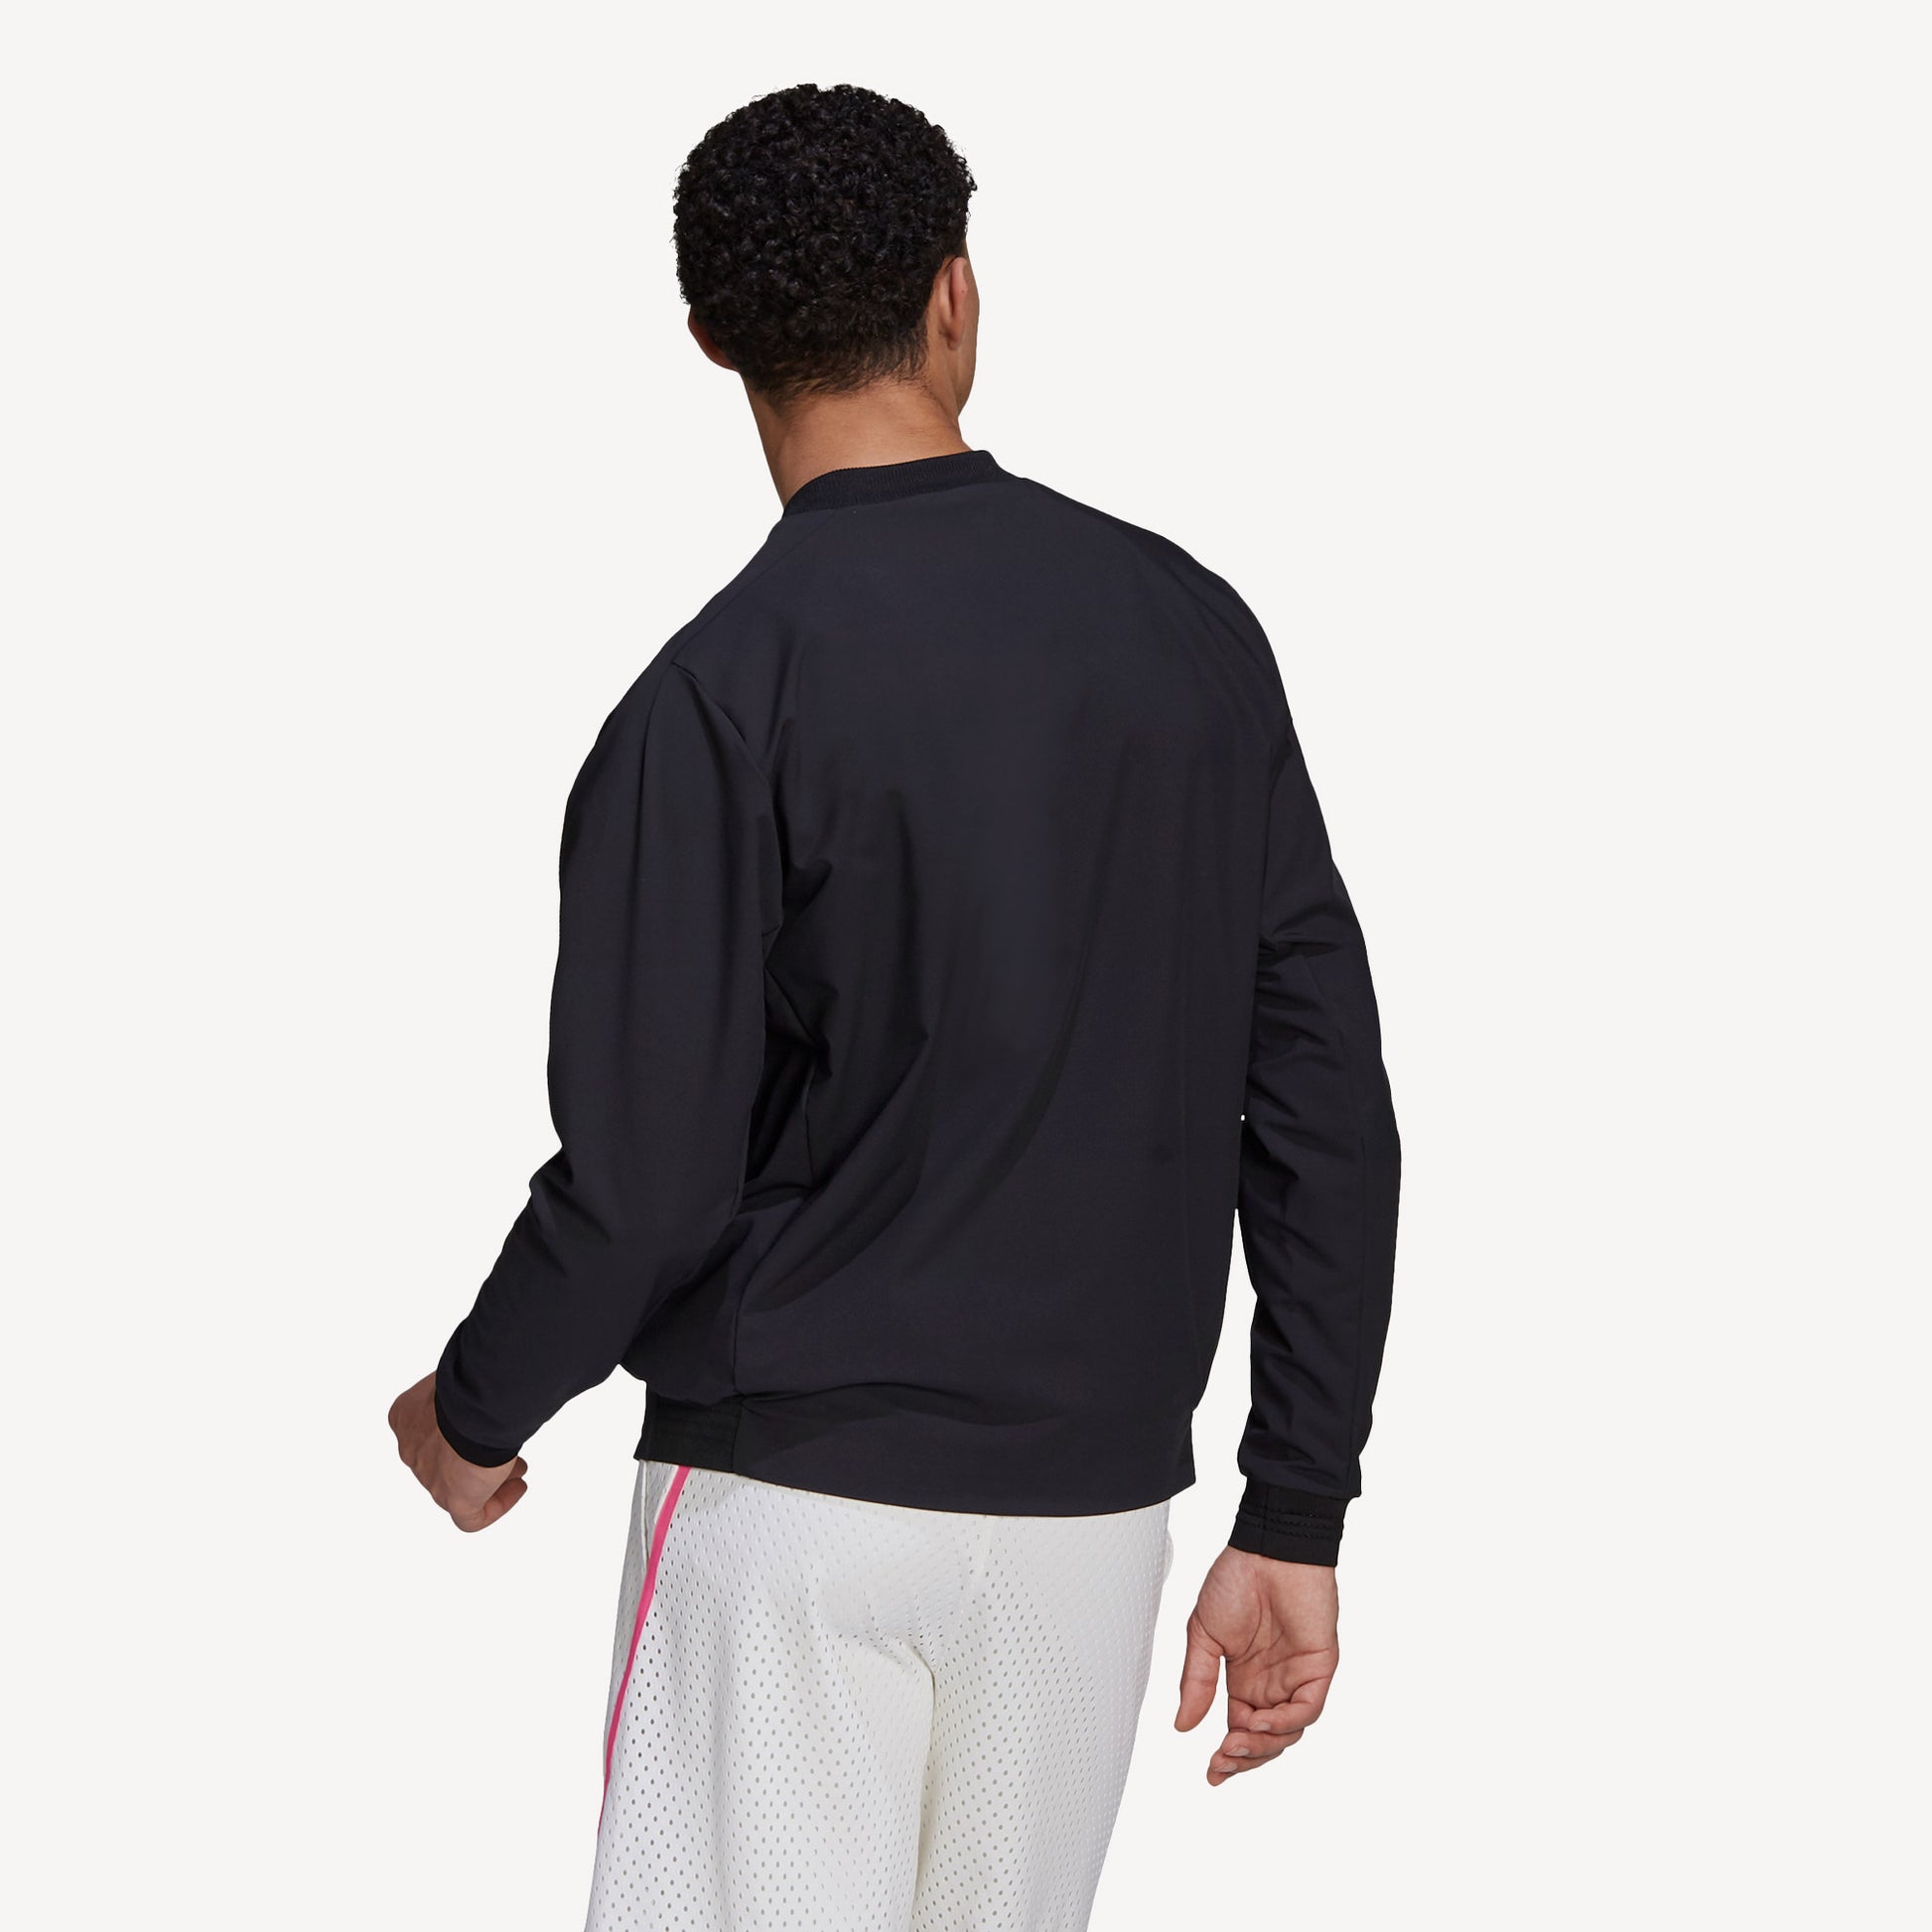 adidas Primeblue Men's Stretch Woven Tennis Jacket Black (2)